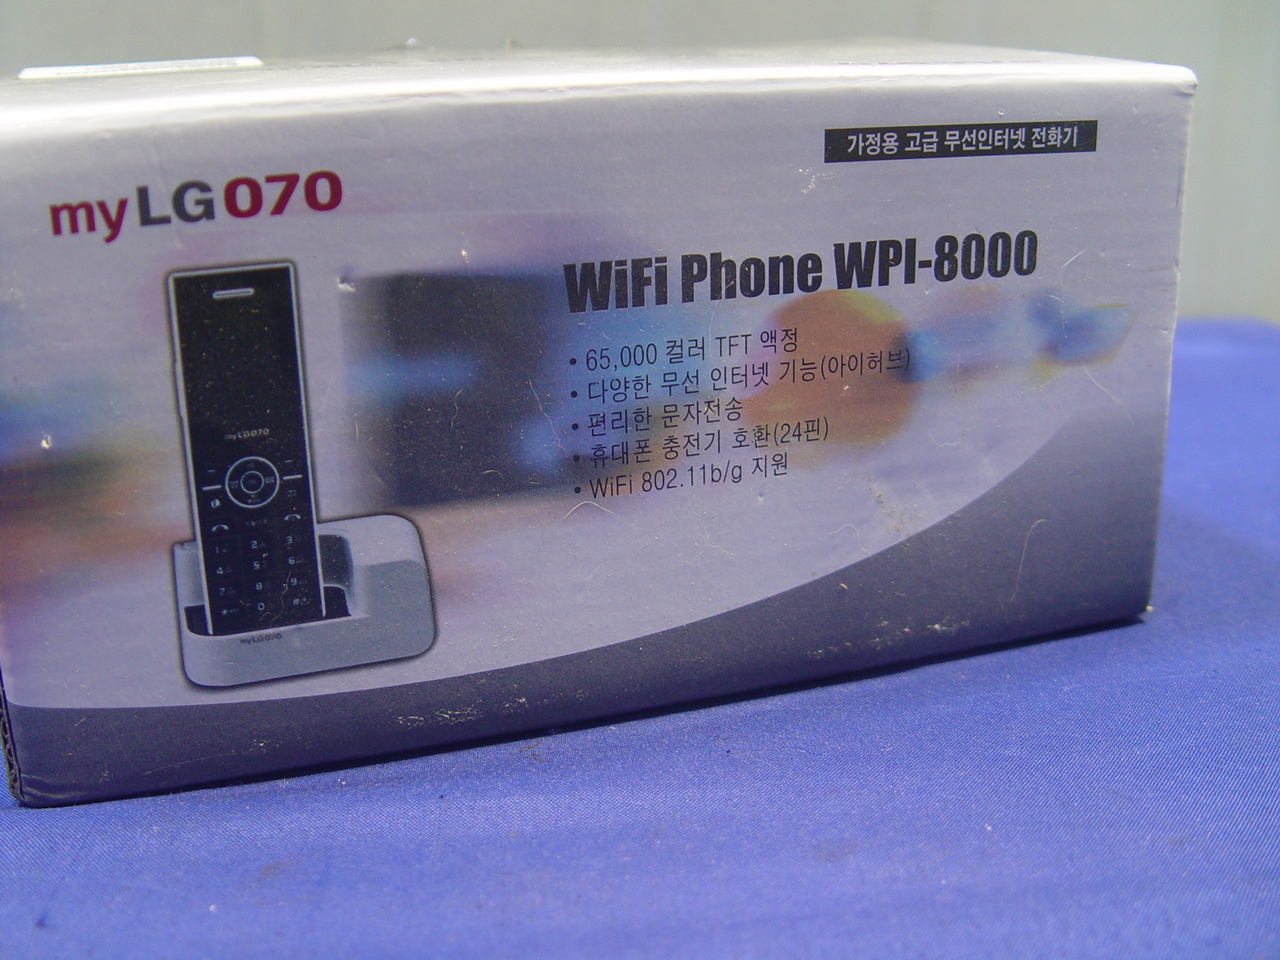 [A8609] myLG070 WiFi Phone WPI-8000